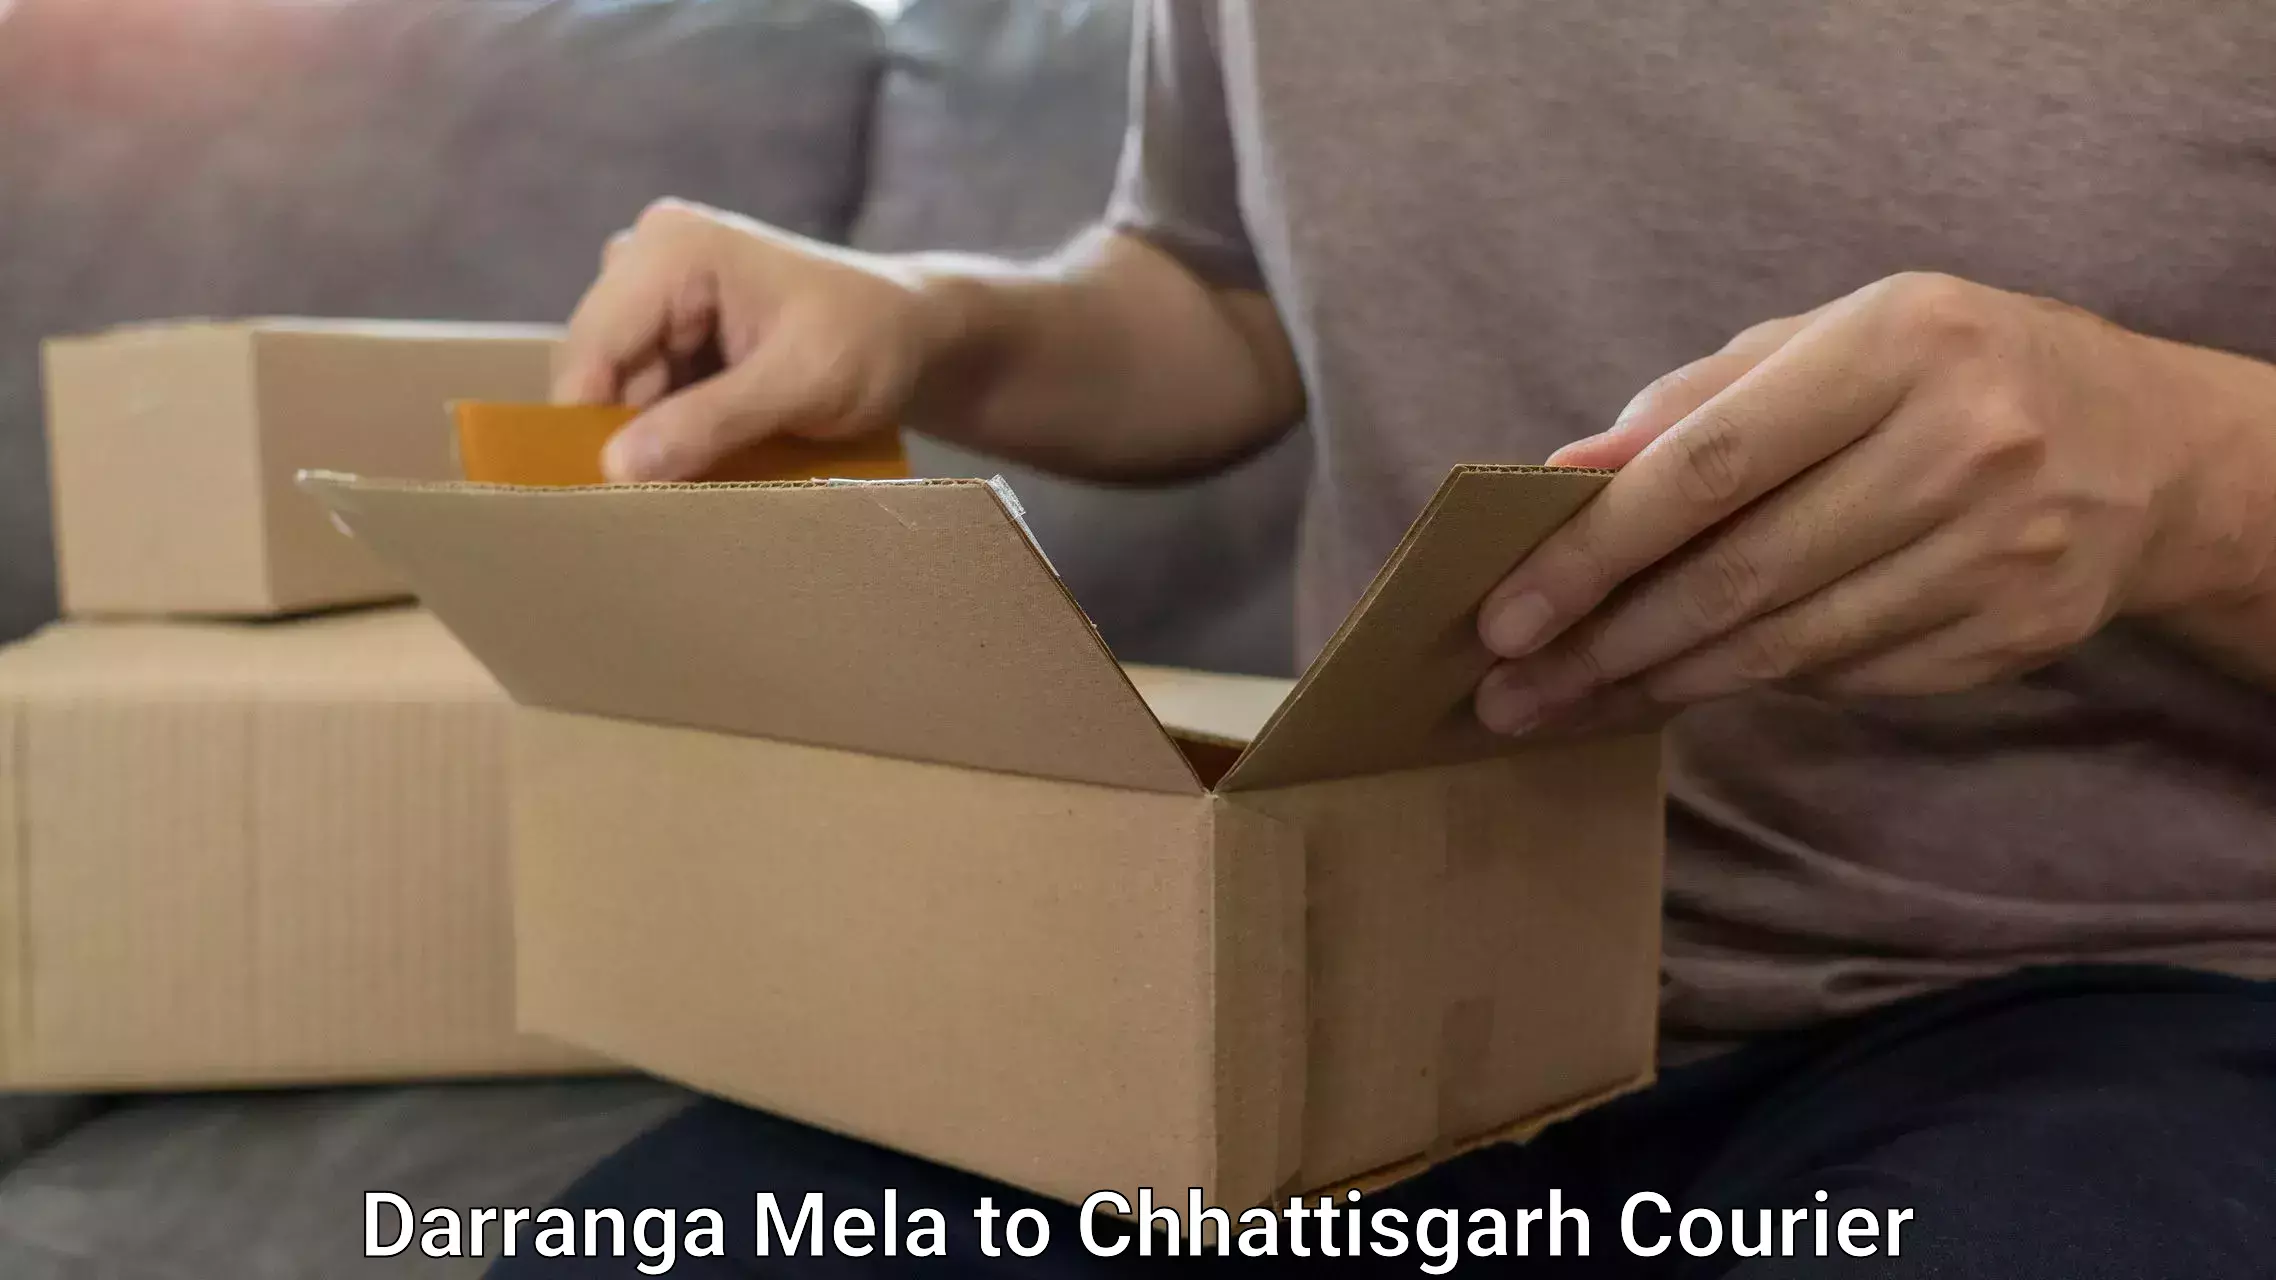 High-quality baggage shipment Darranga Mela to Bijapur Chhattisgarh